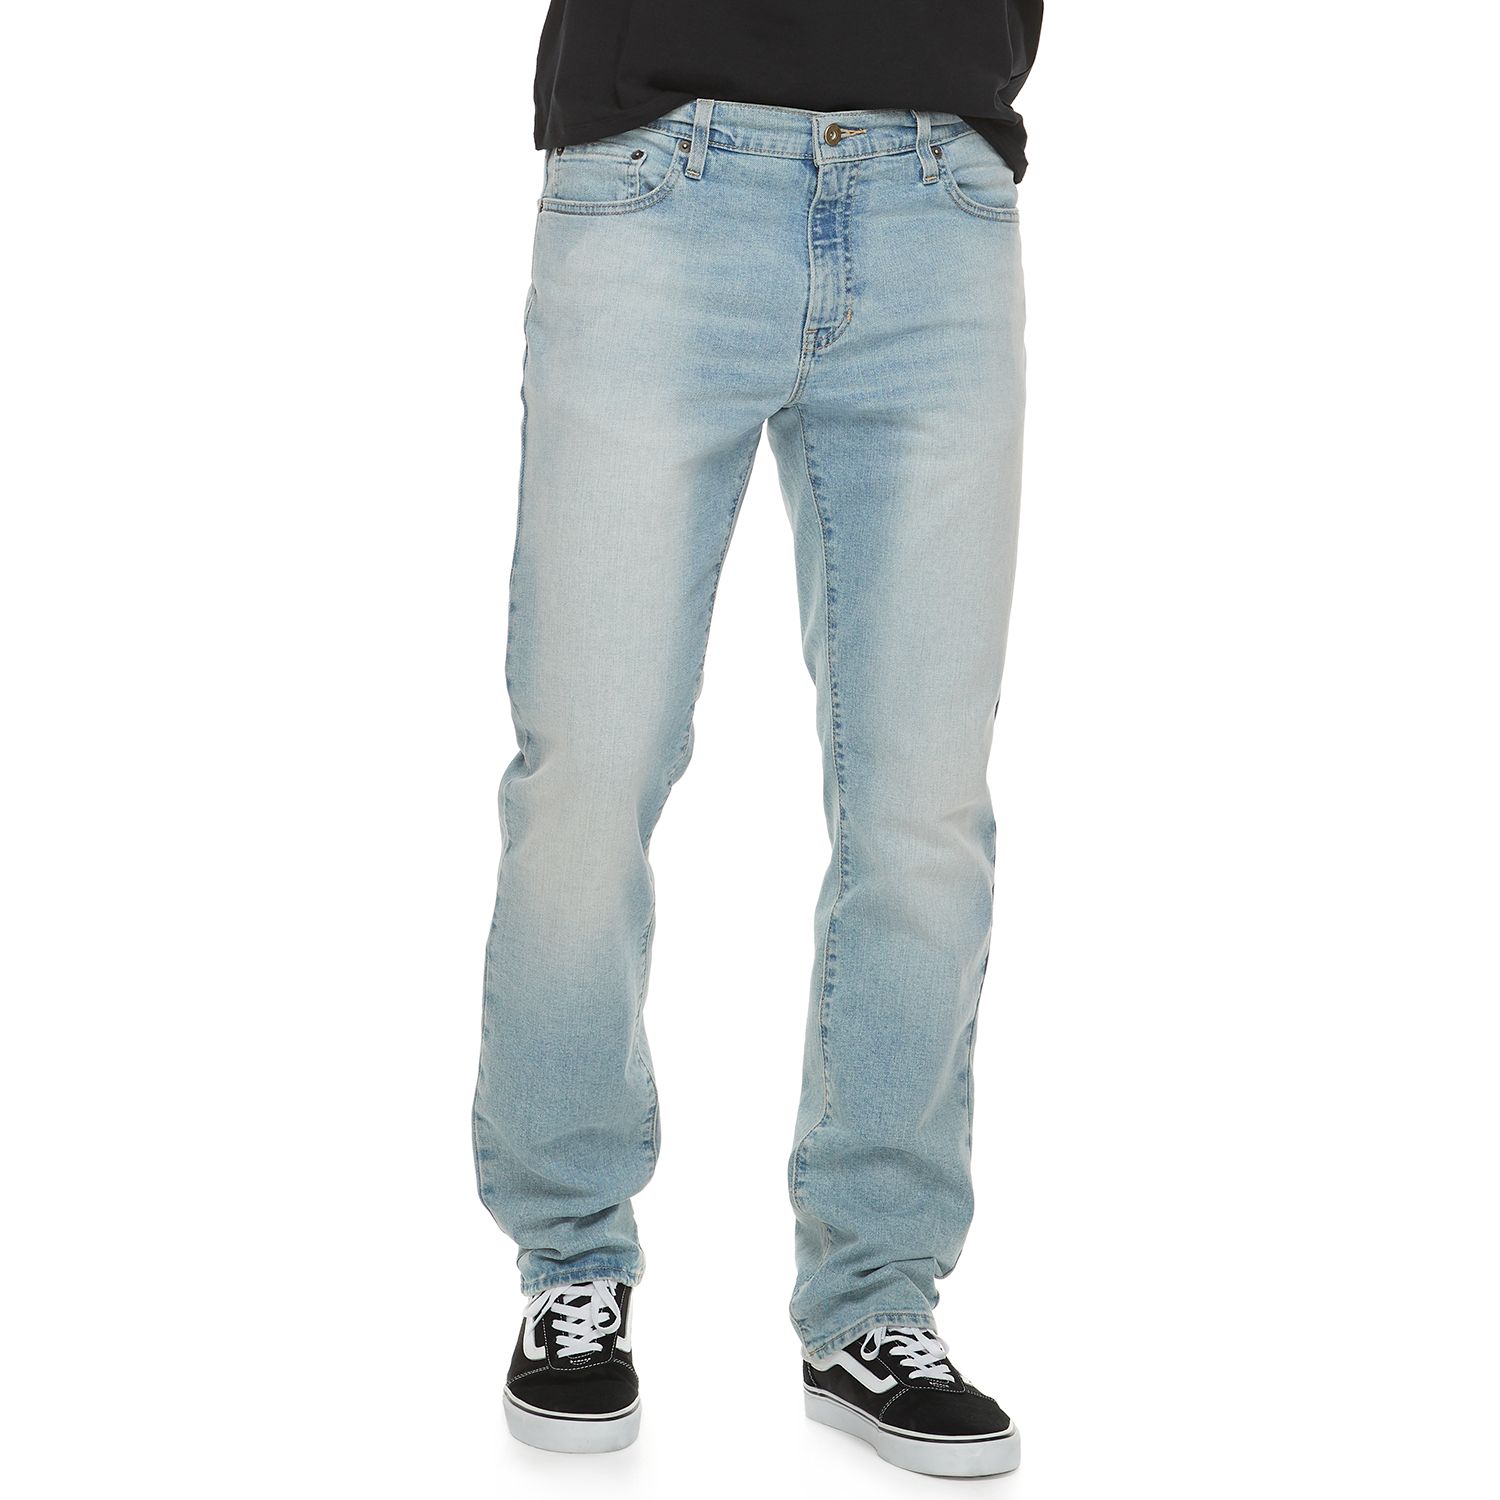 urban star jeans kohls